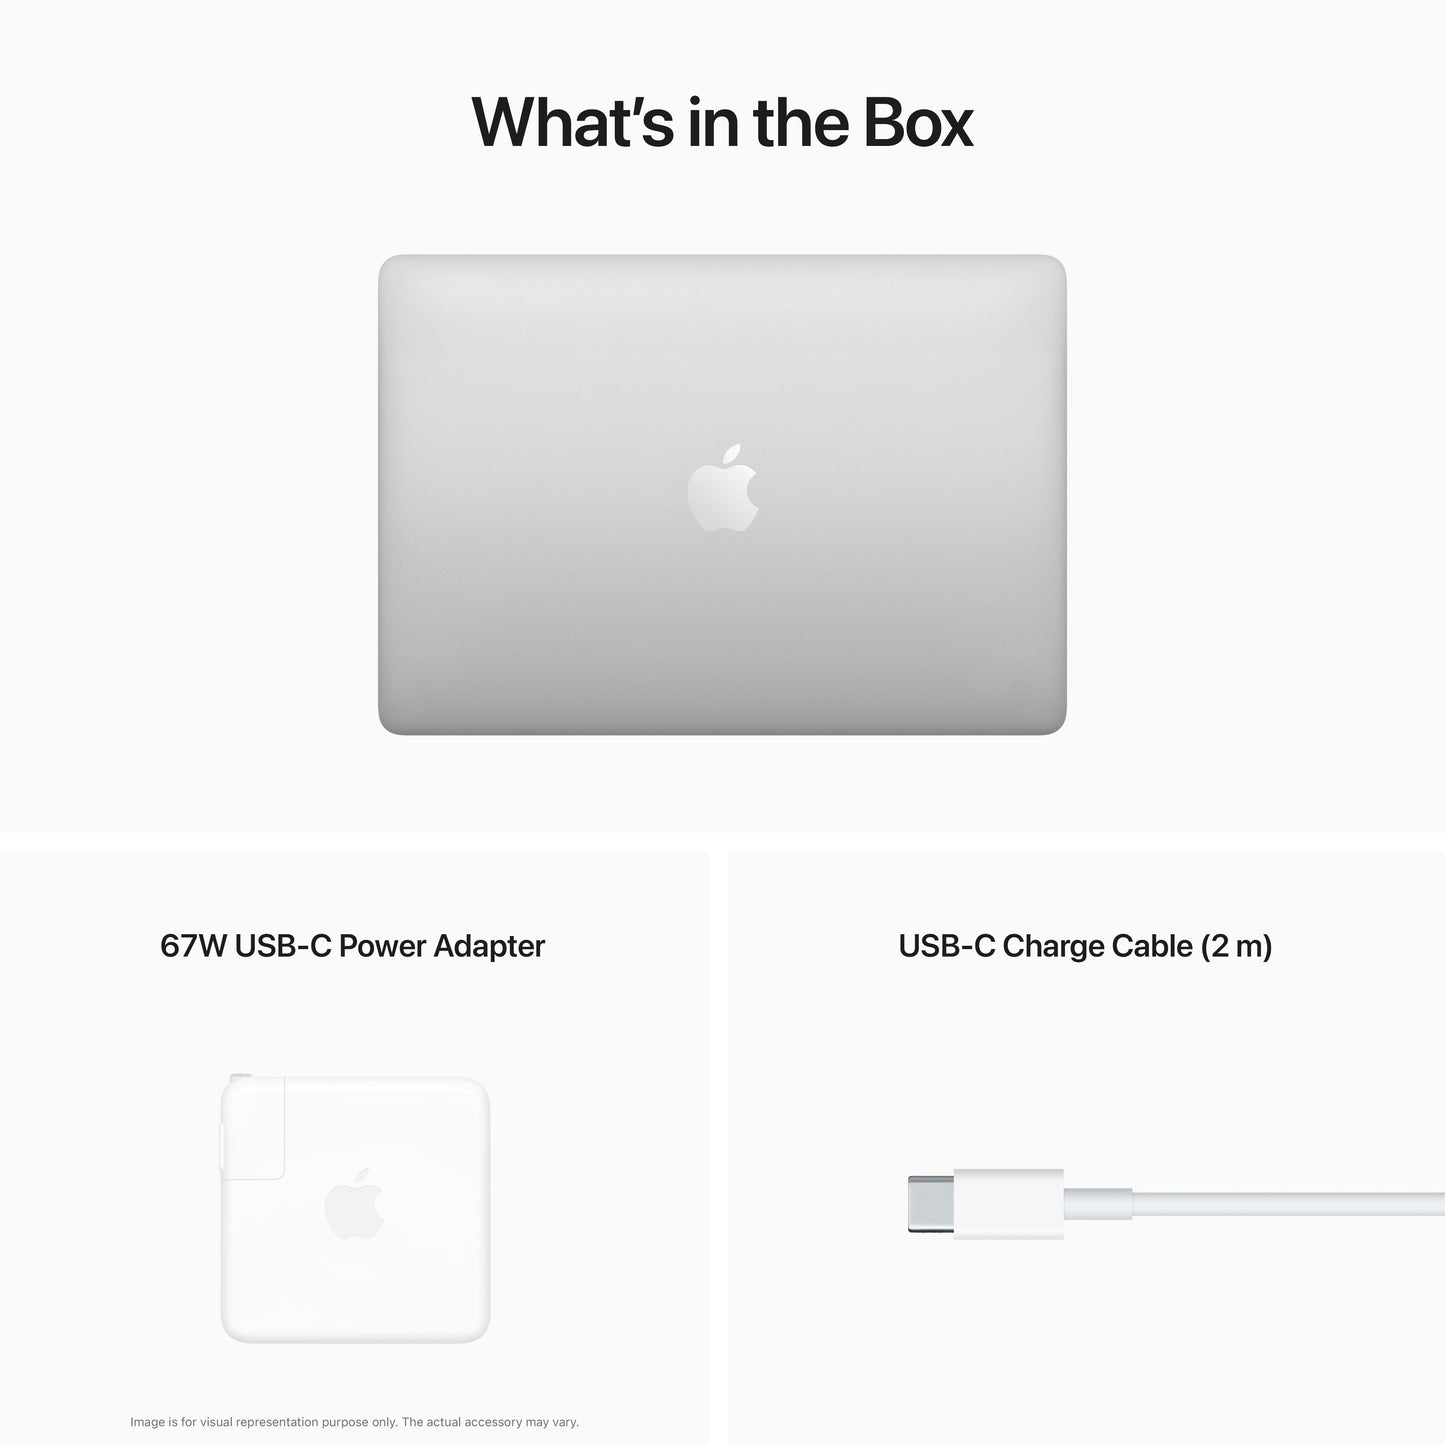 13-inch MacBook Pro: Apple M2 chip with 8‑core CPU and 10‑core GPU, 512GB SSD - Silver